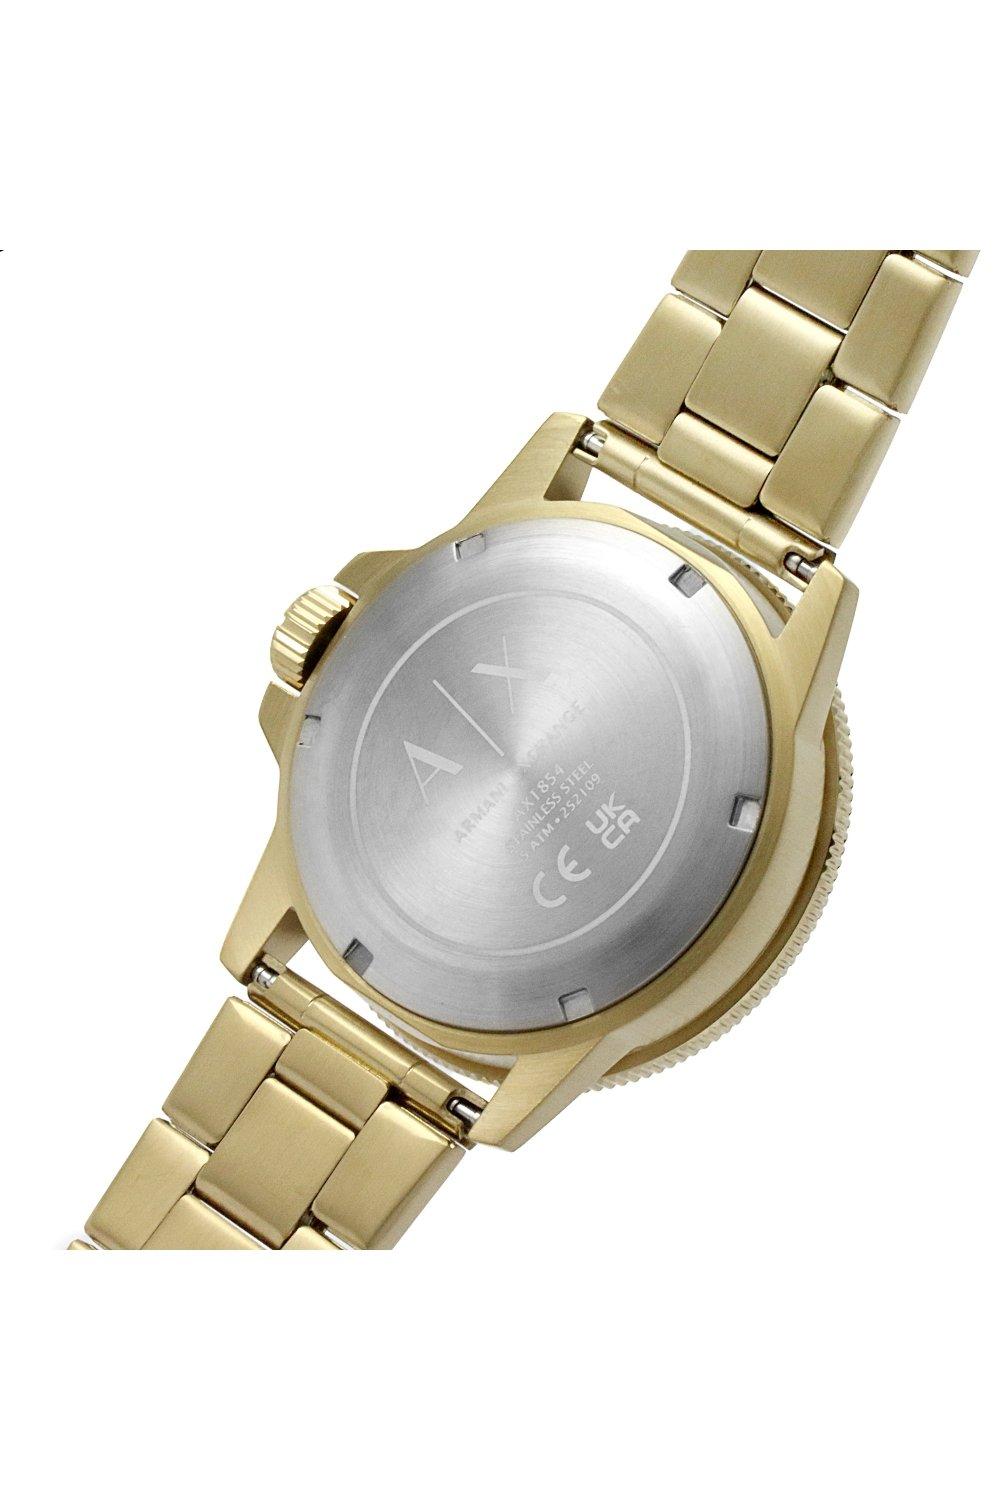 Watches | Stainless Steel Fashion Analogue Quartz Watch - Ax1854 | Armani  Exchange